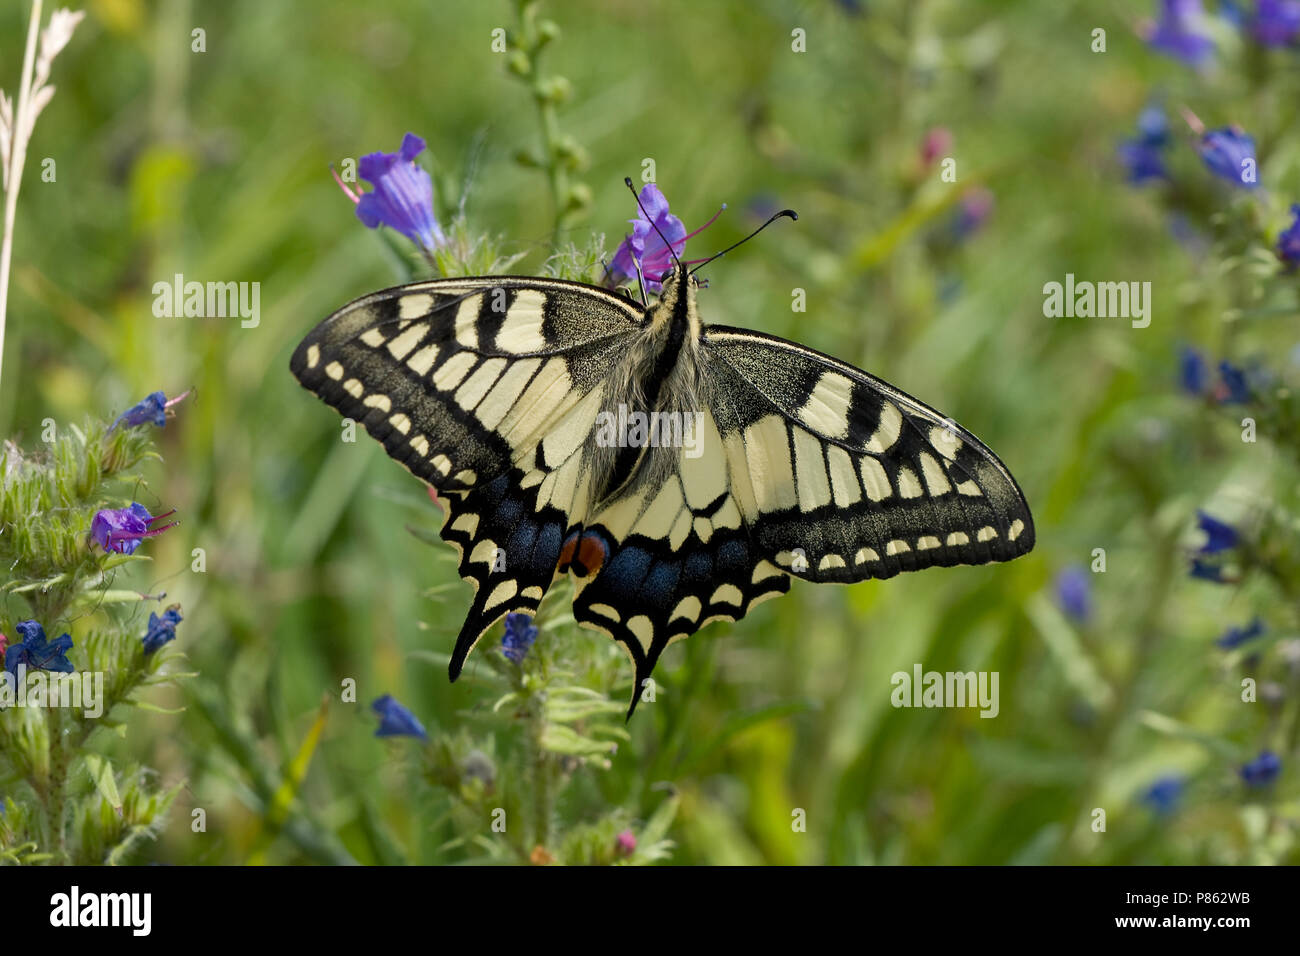 Koninginnepage op Slangenkruid; Swallowtail on Vipers bugloss Stock Photo